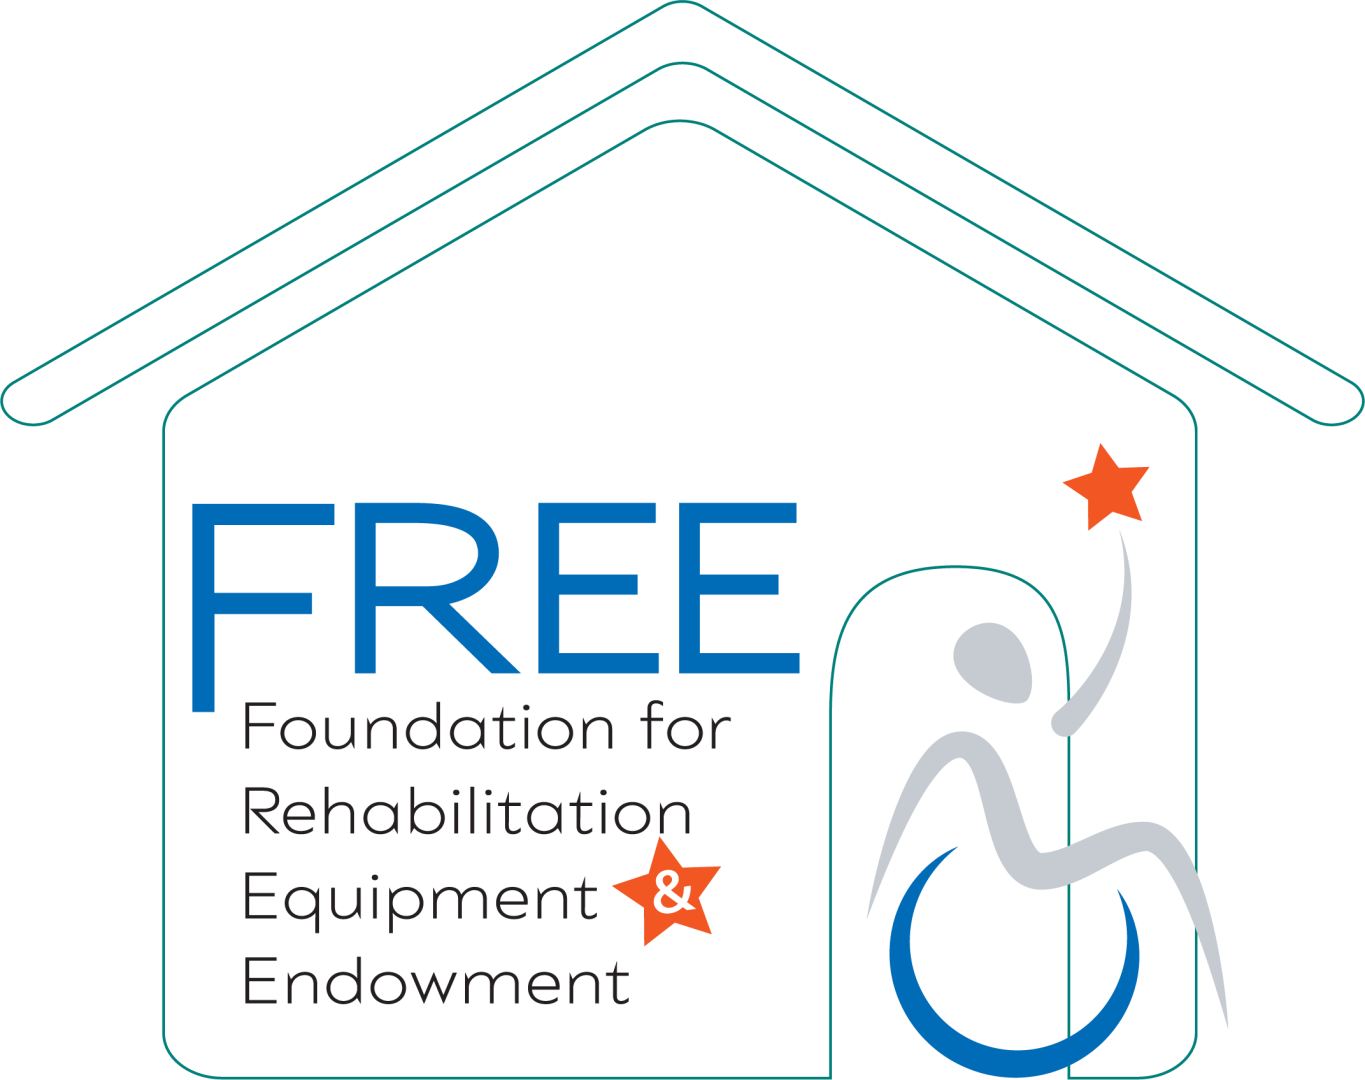 New FREE logo 2020